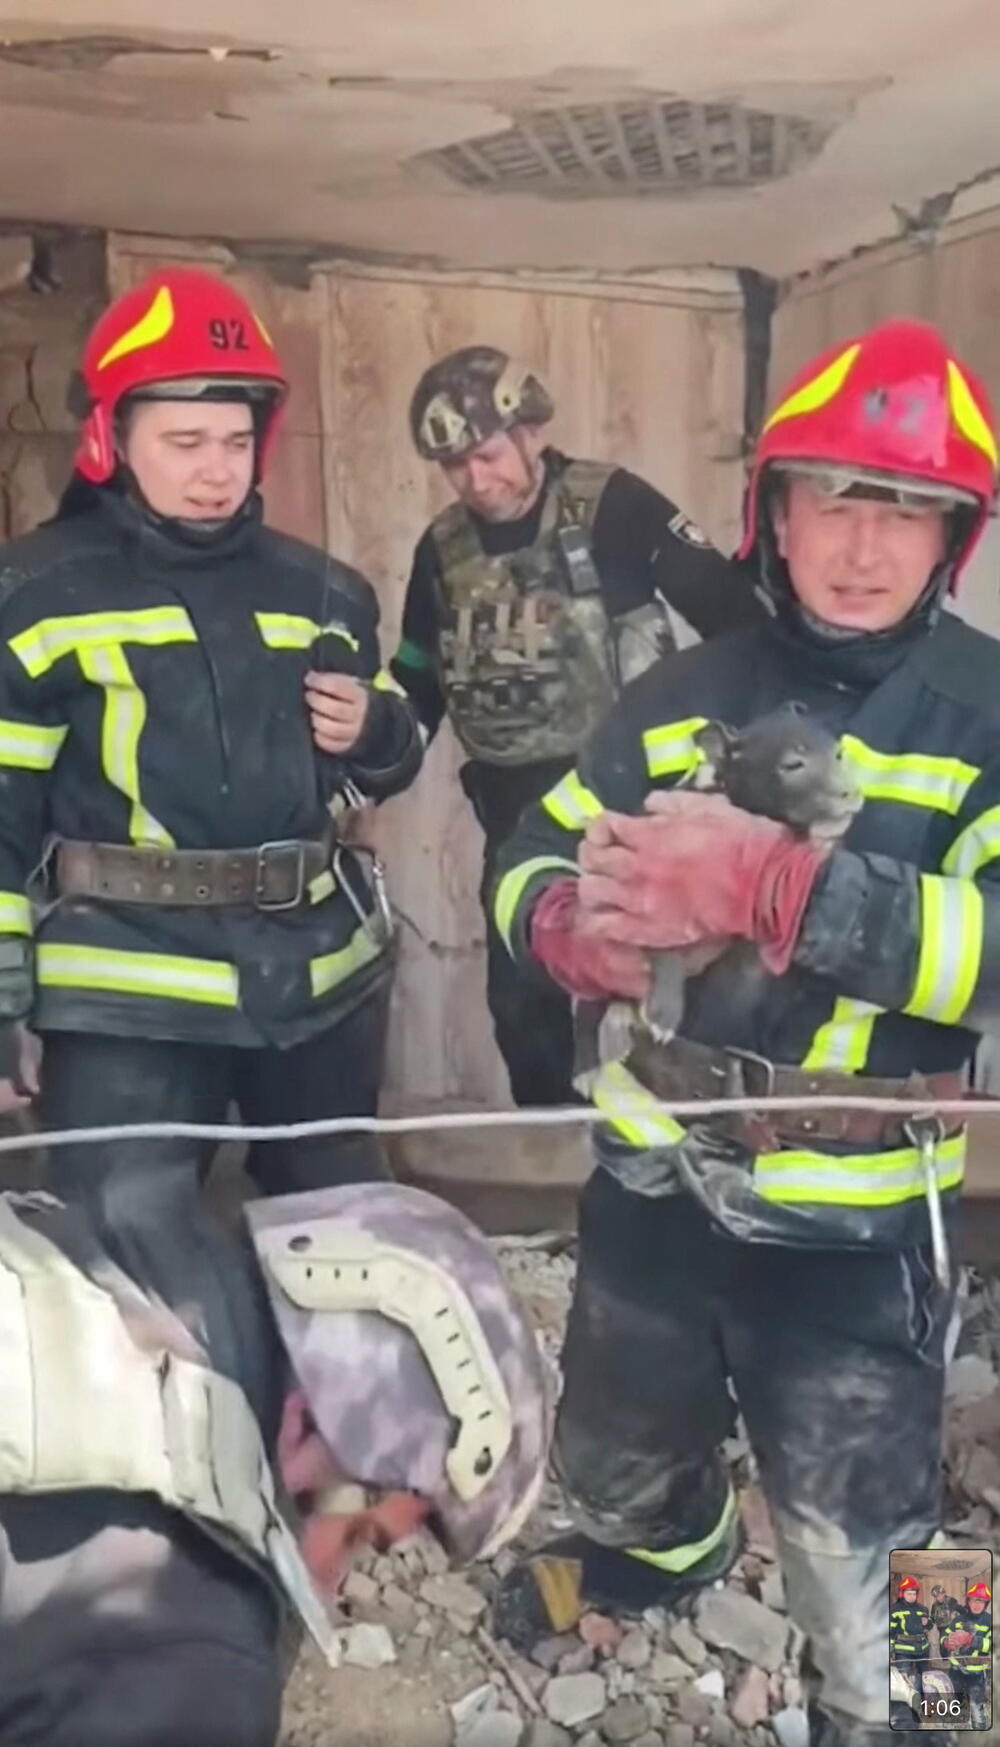 <p>Regionalna policija Donjecka objavila je snimak na kojem se vidi kako spasioci kopaju po ruševinama kako bi došli do zarobljenog psa</p>